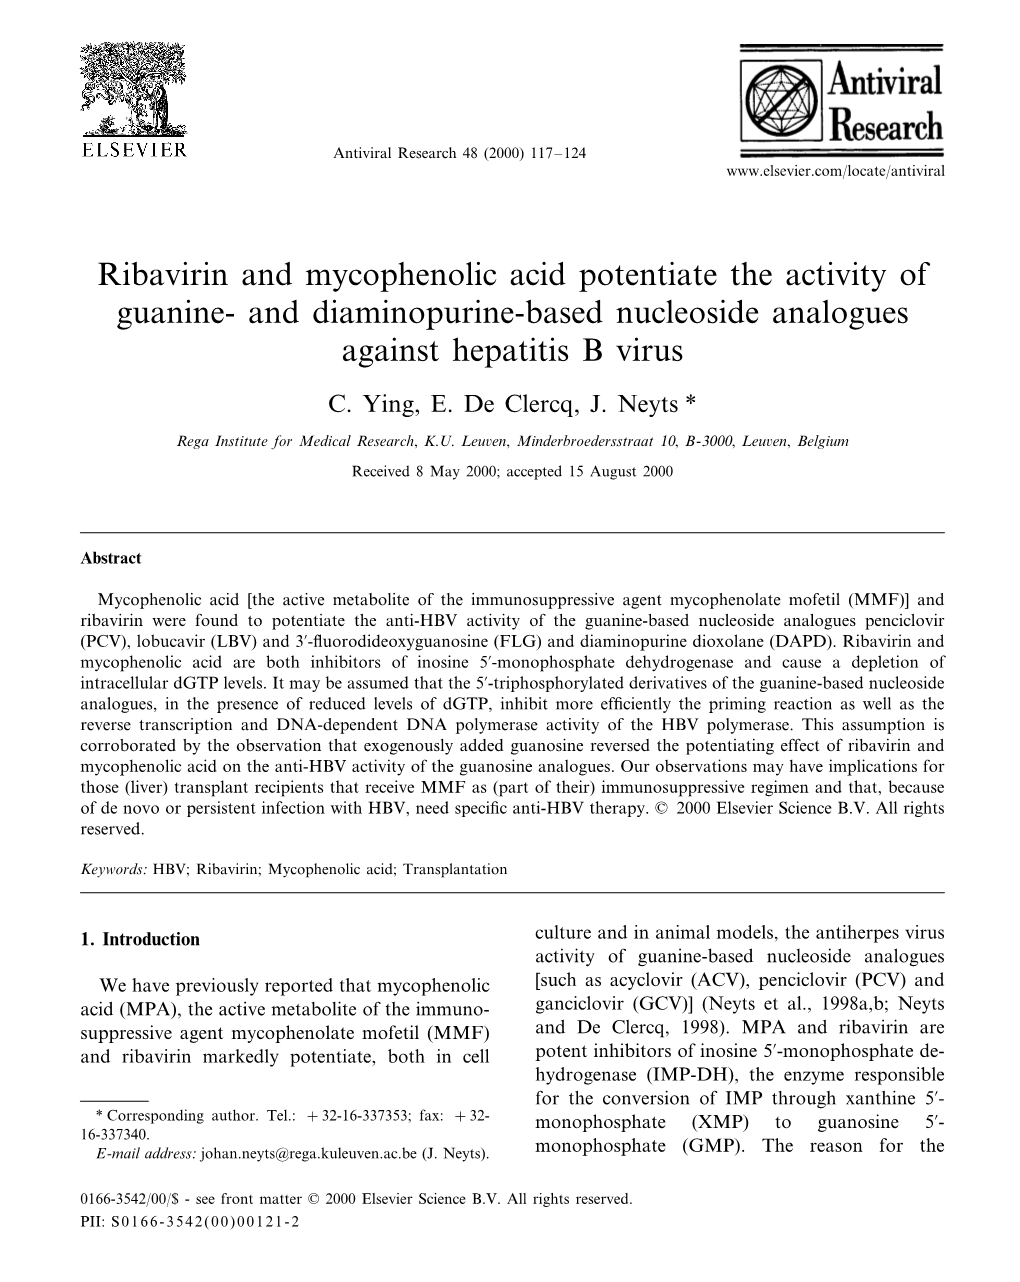 Ribavirin and Mycophenolic Acid Potentiate the Activity of Guanine- and Diaminopurine-Based Nucleoside Analogues Against Hepatitis B Virus